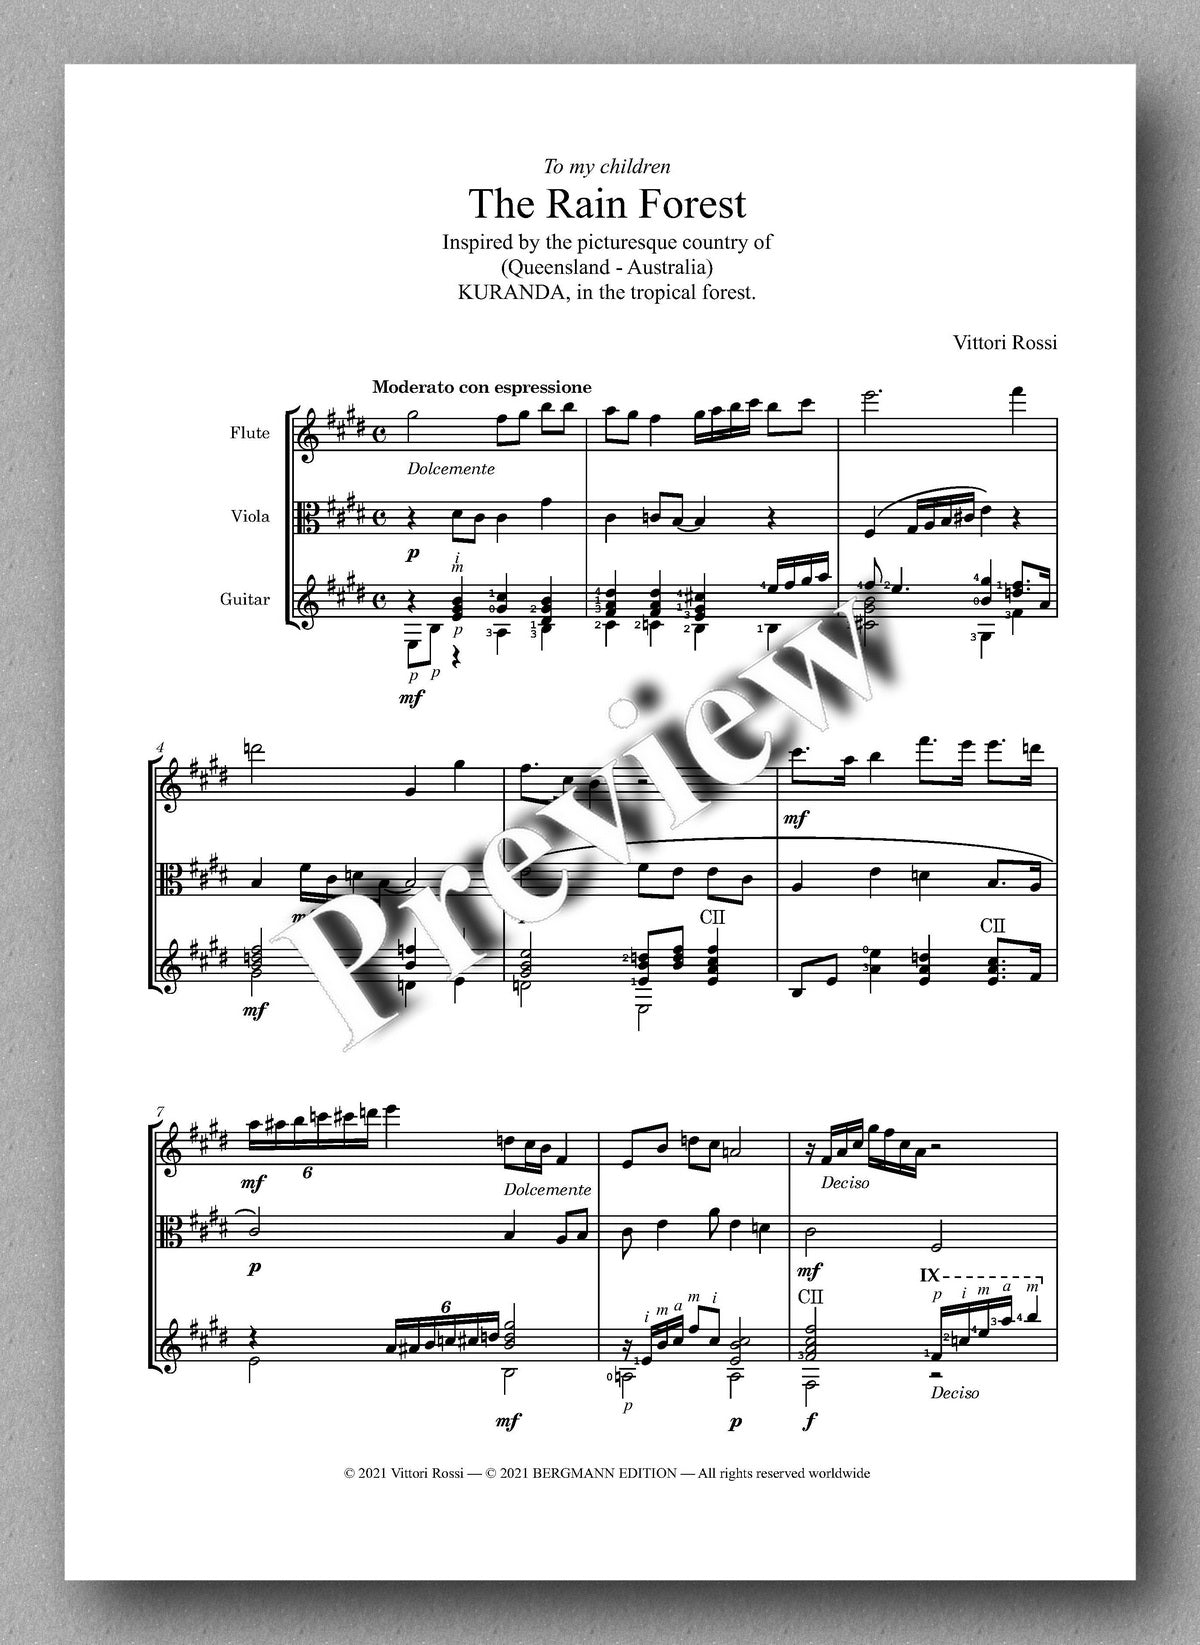 Vittori Rossi, The Rain Forest - music score -1